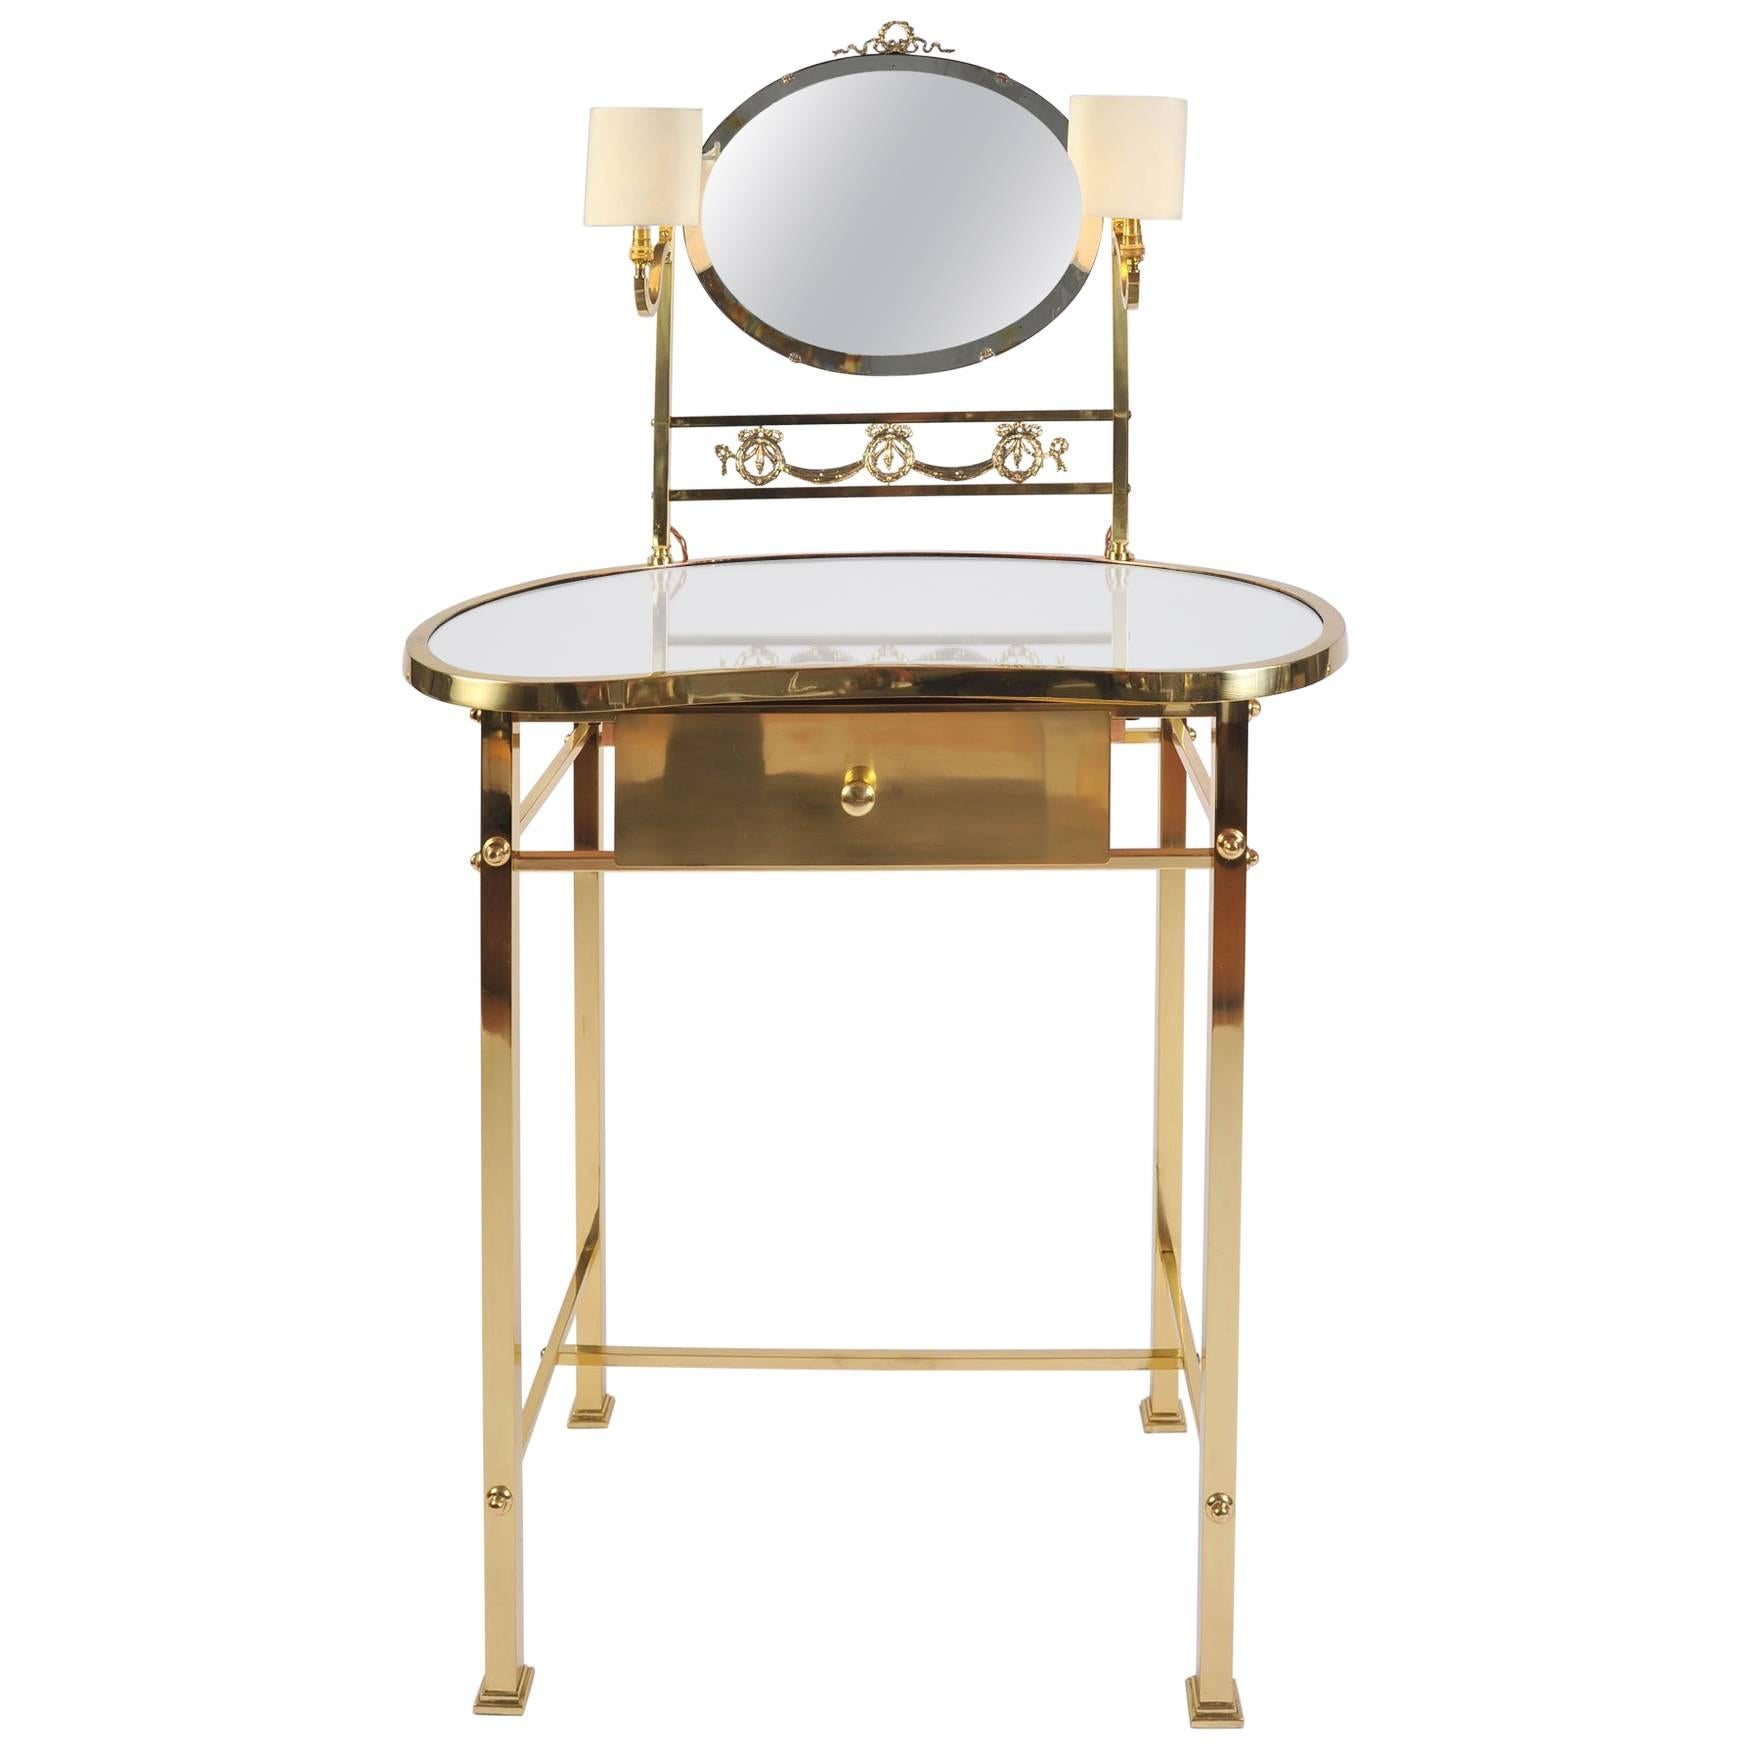 1950s Italian Brass Vanity or Dressing Table